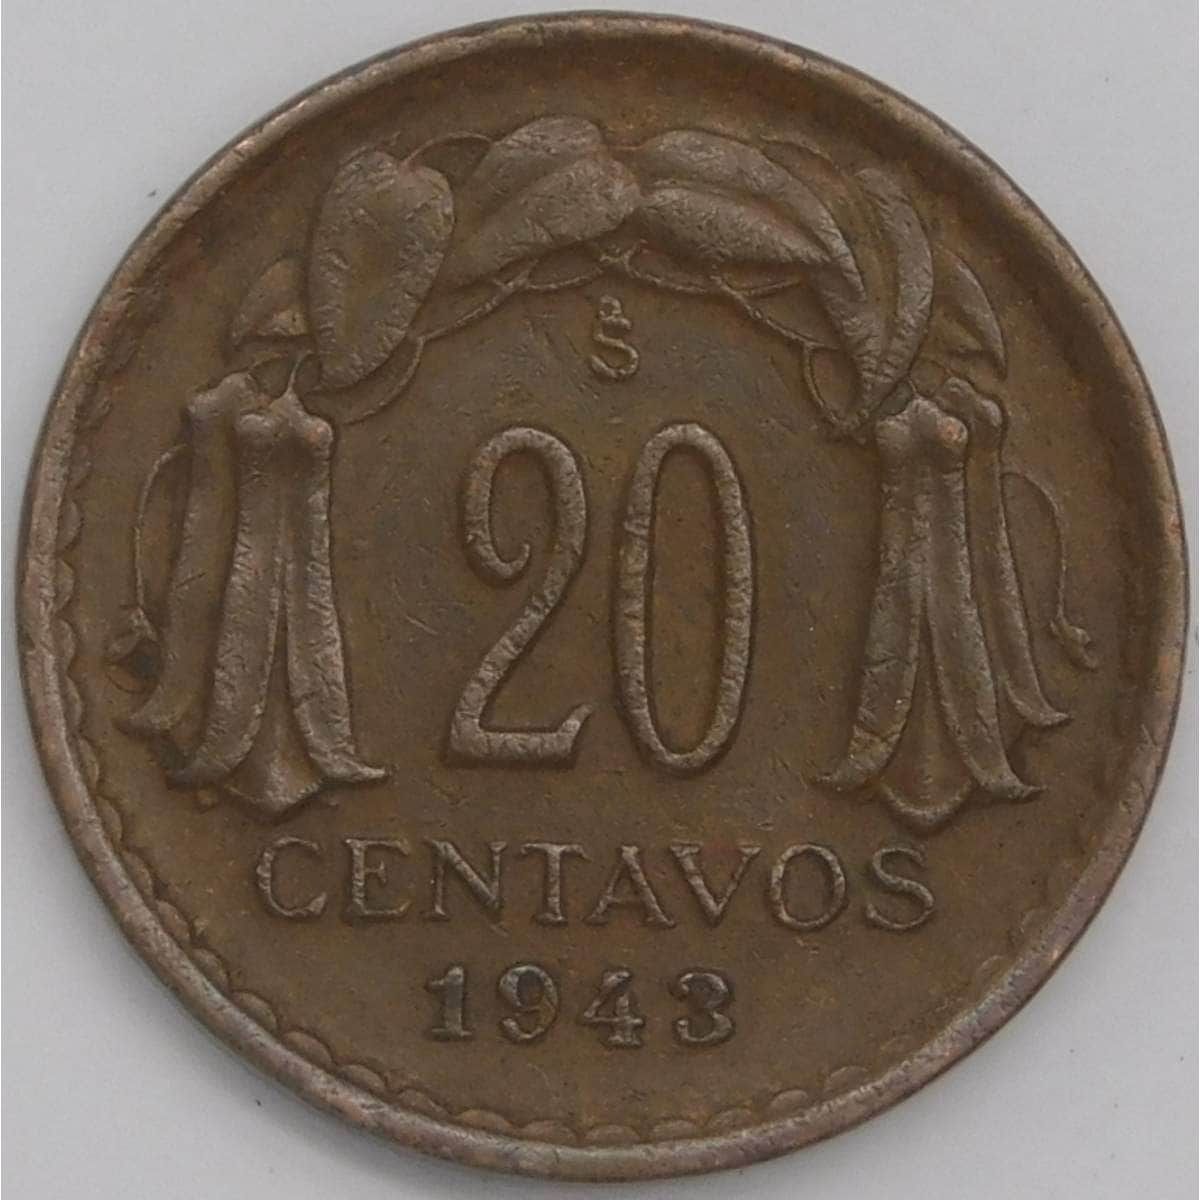 Монеты 1951. Монеты Чили. Монеты Чили показать. Монеты Чили 2008 год ооибкитпри производство.